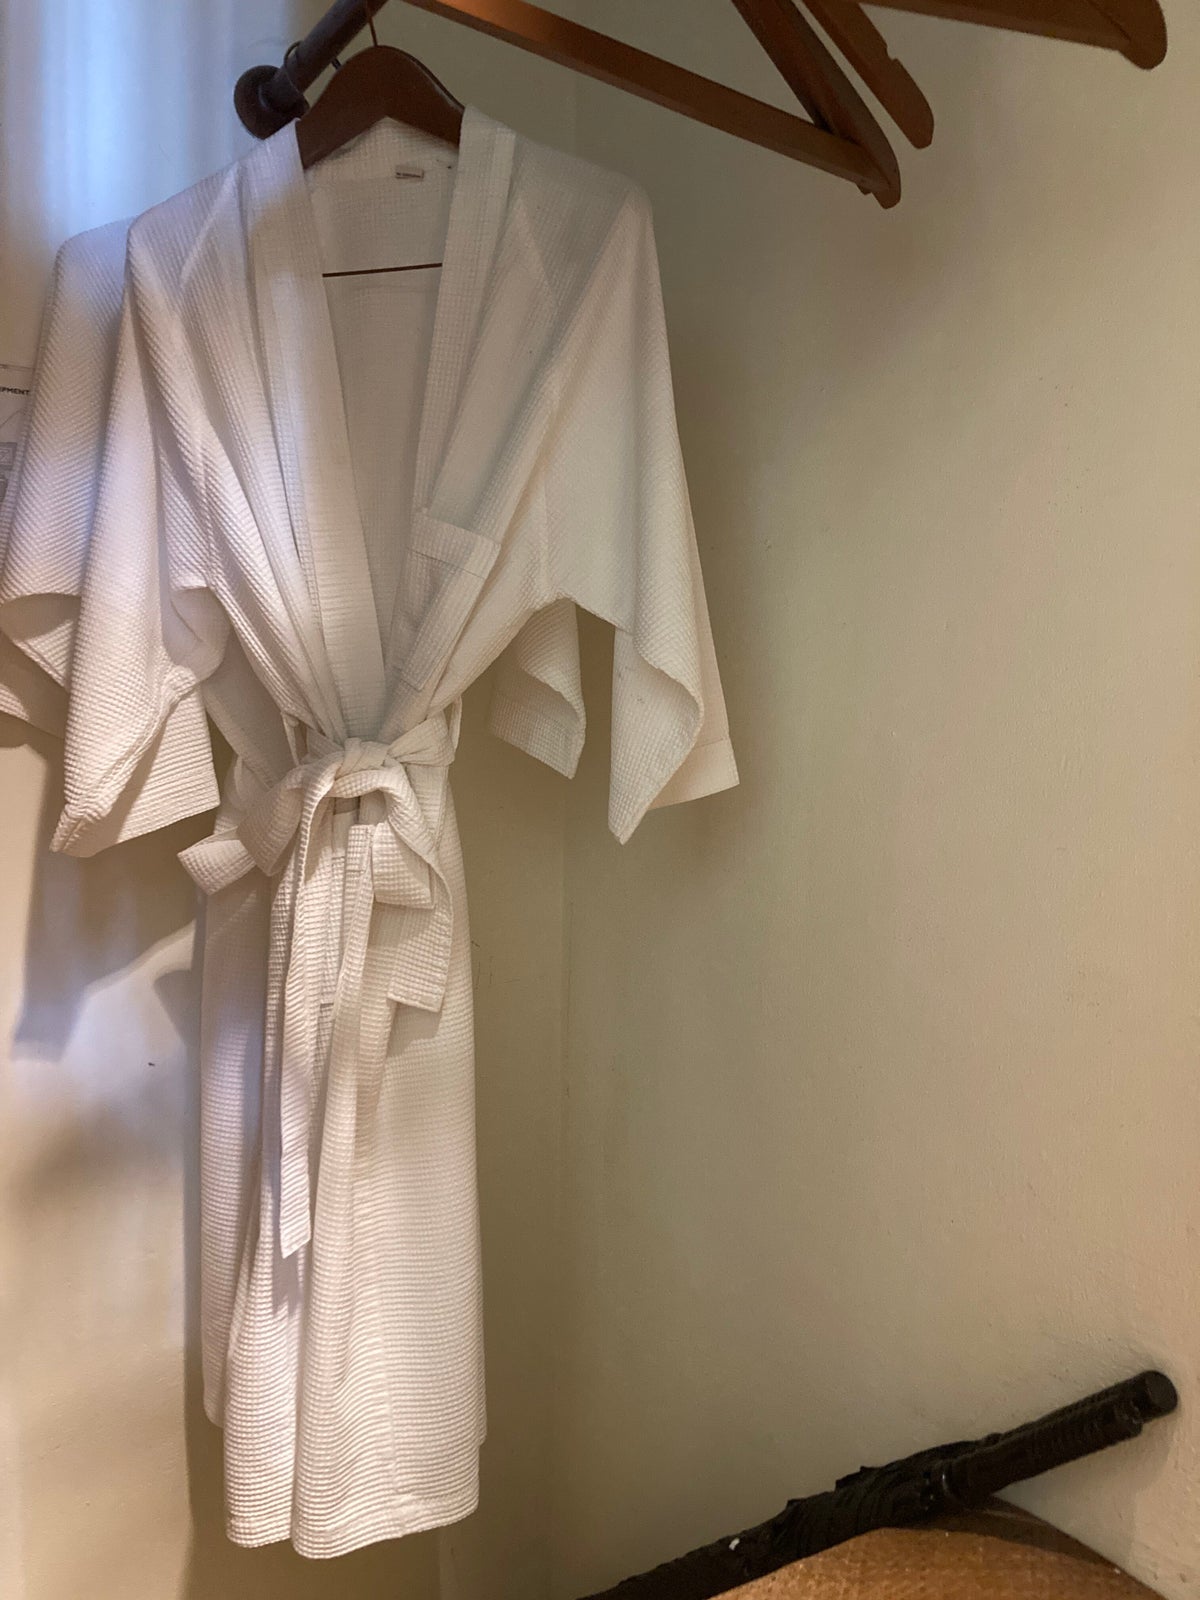 Alila Manggis Bali bedroom closet robes